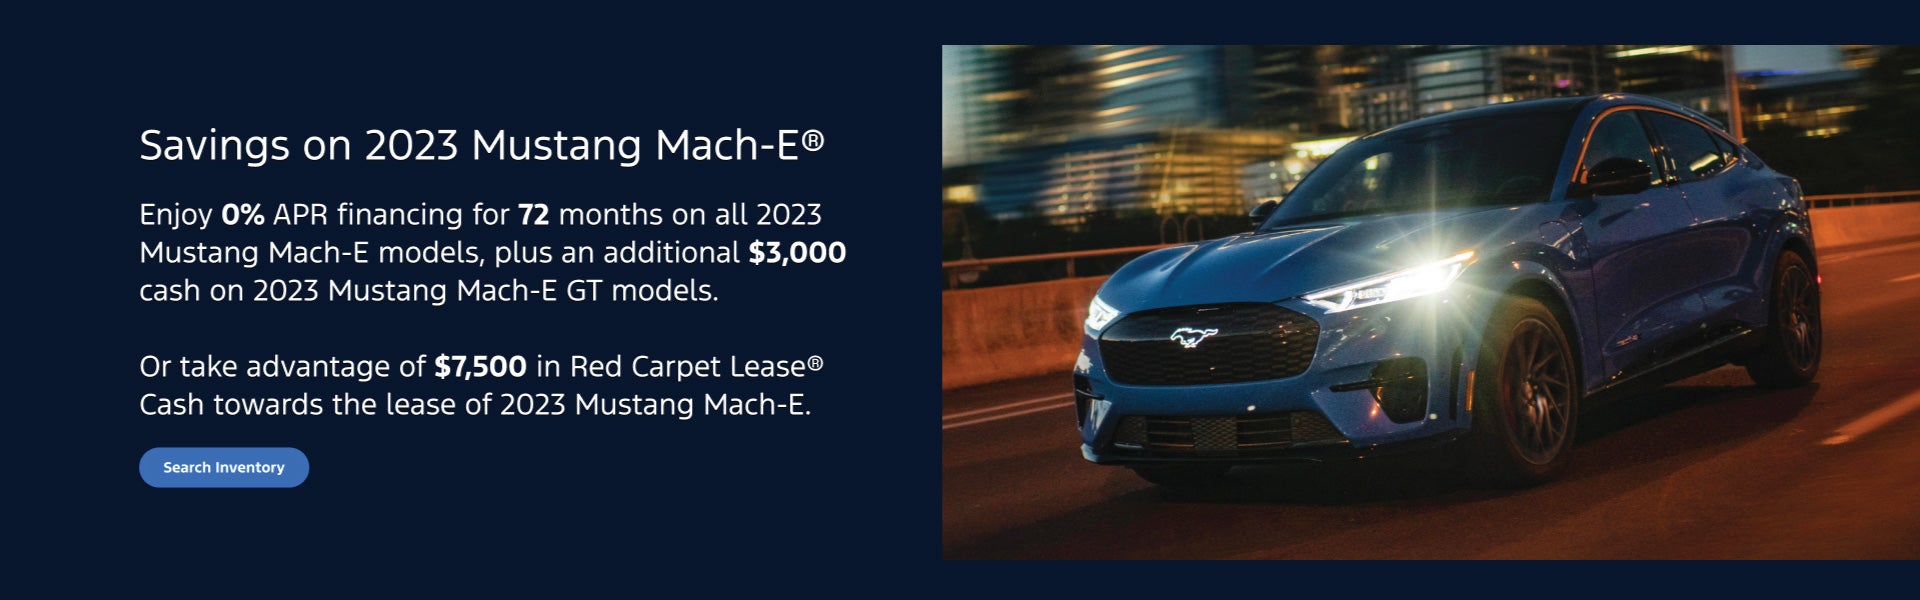 Mustang Mach-E Incentive